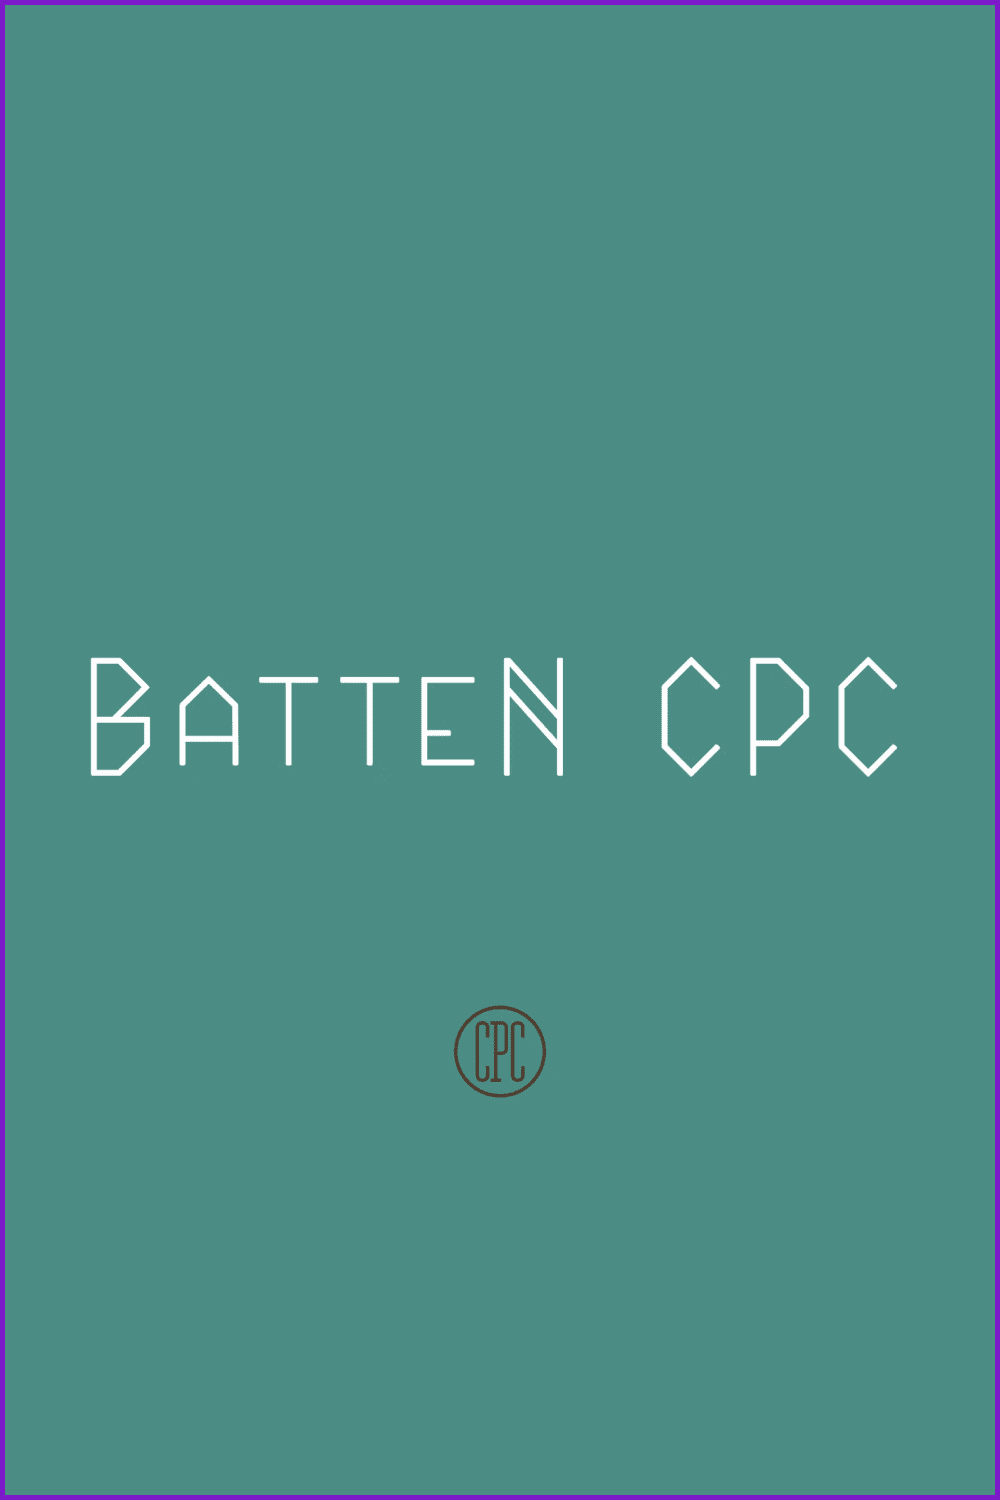 Batten CPC.